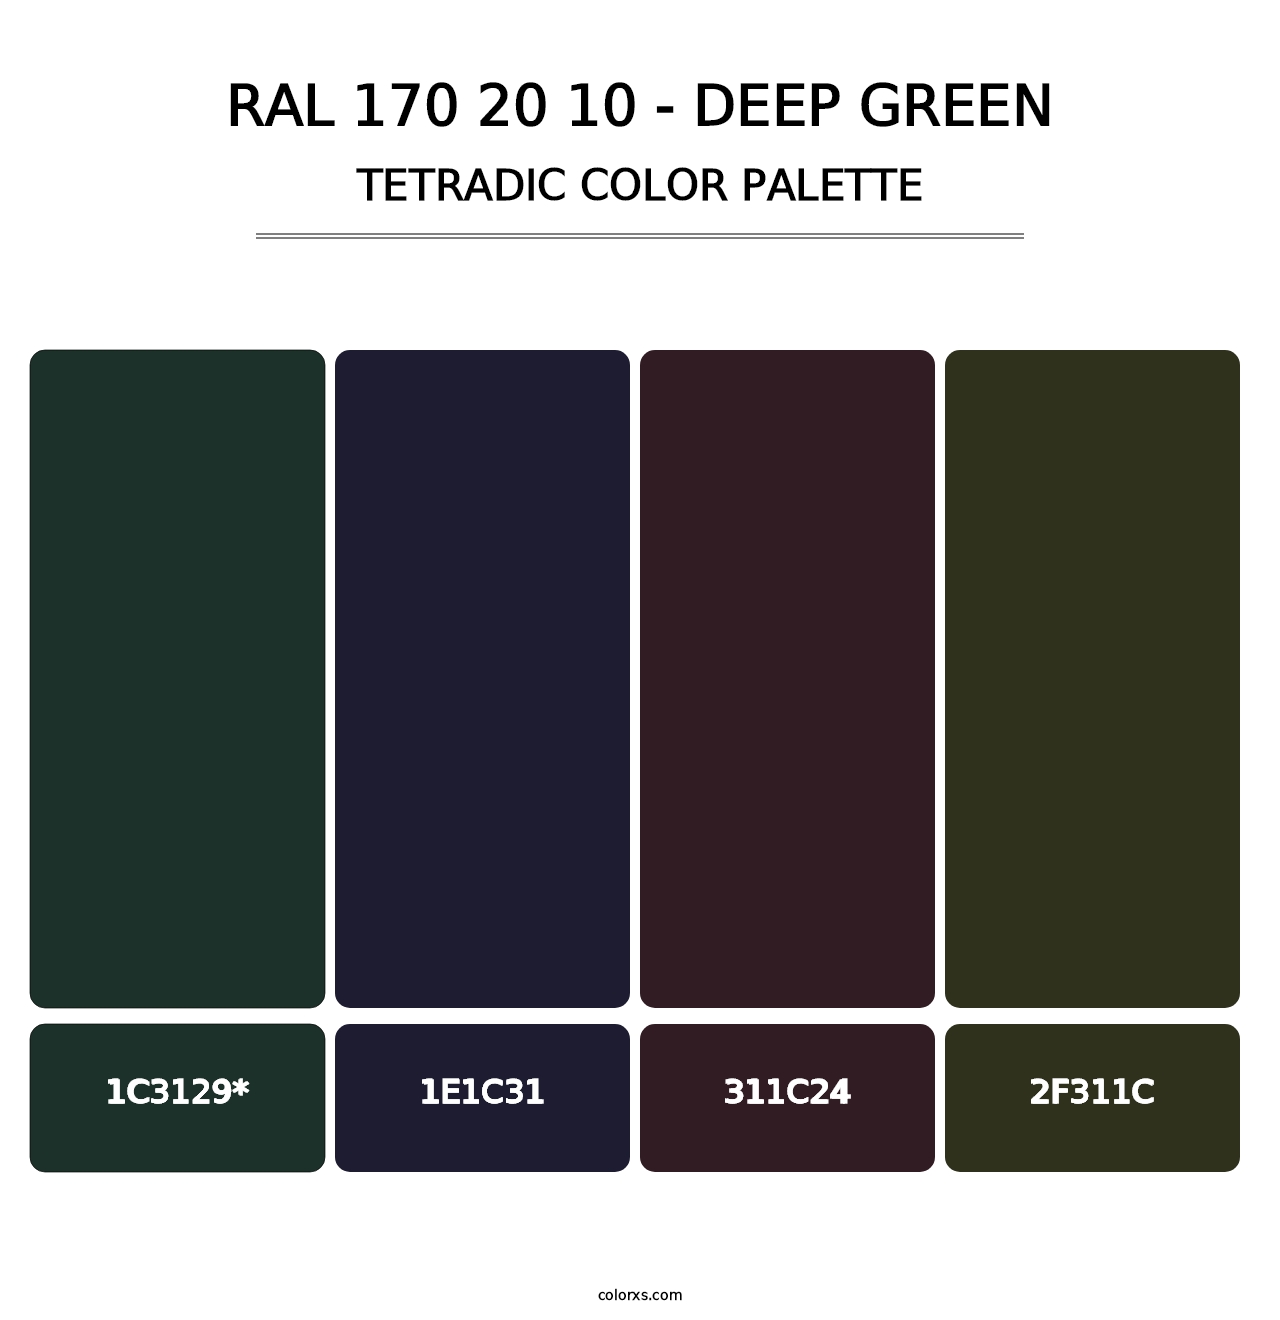 RAL 170 20 10 - Deep Green - Tetradic Color Palette